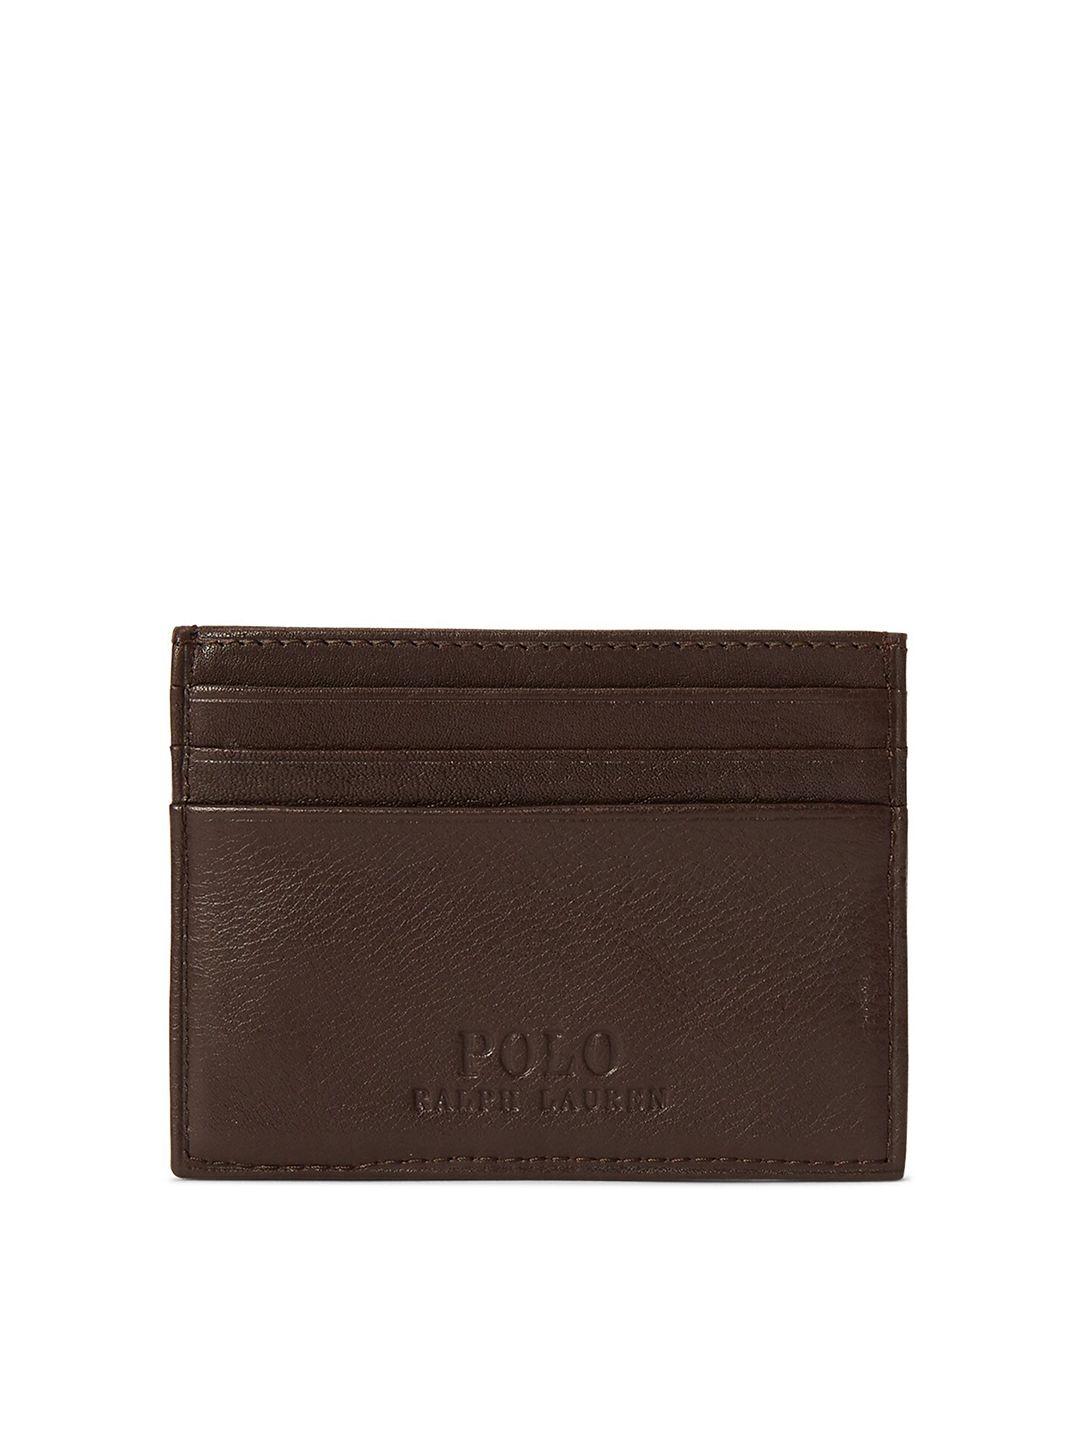 polo-ralph-lauren-men-textured-pebble-leather-card-case